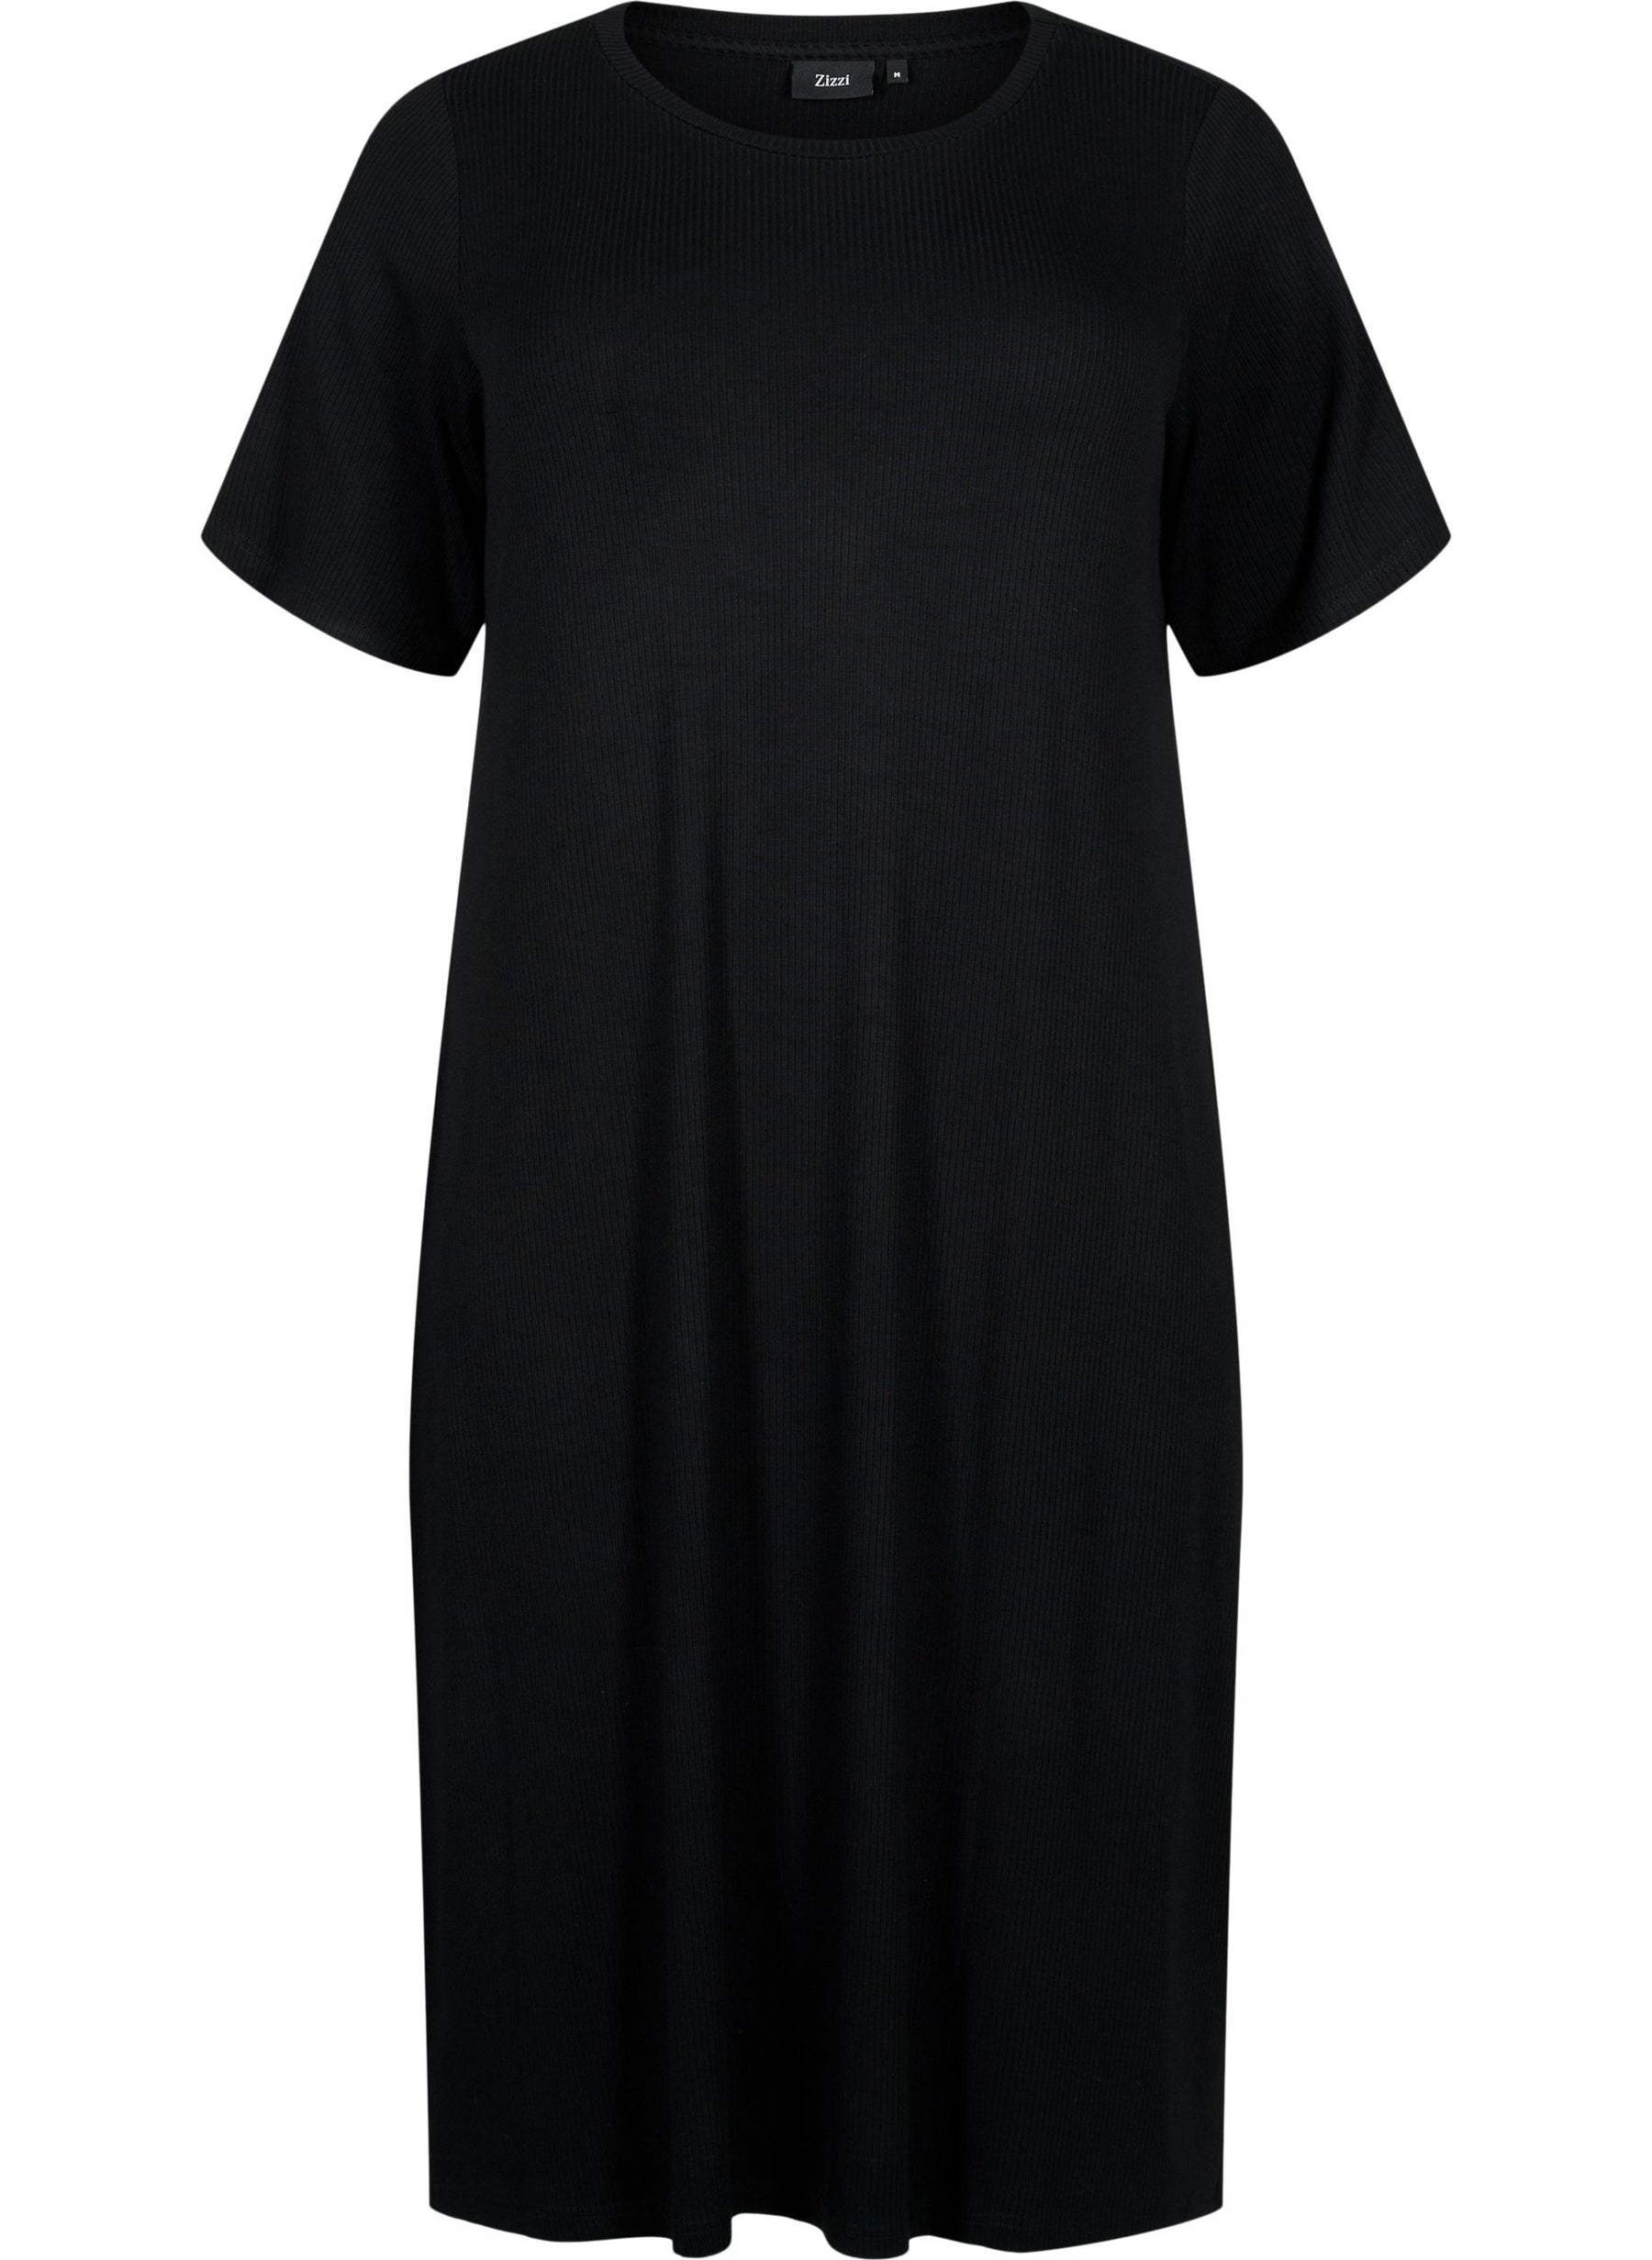 Zizzi Carly Dress in Black